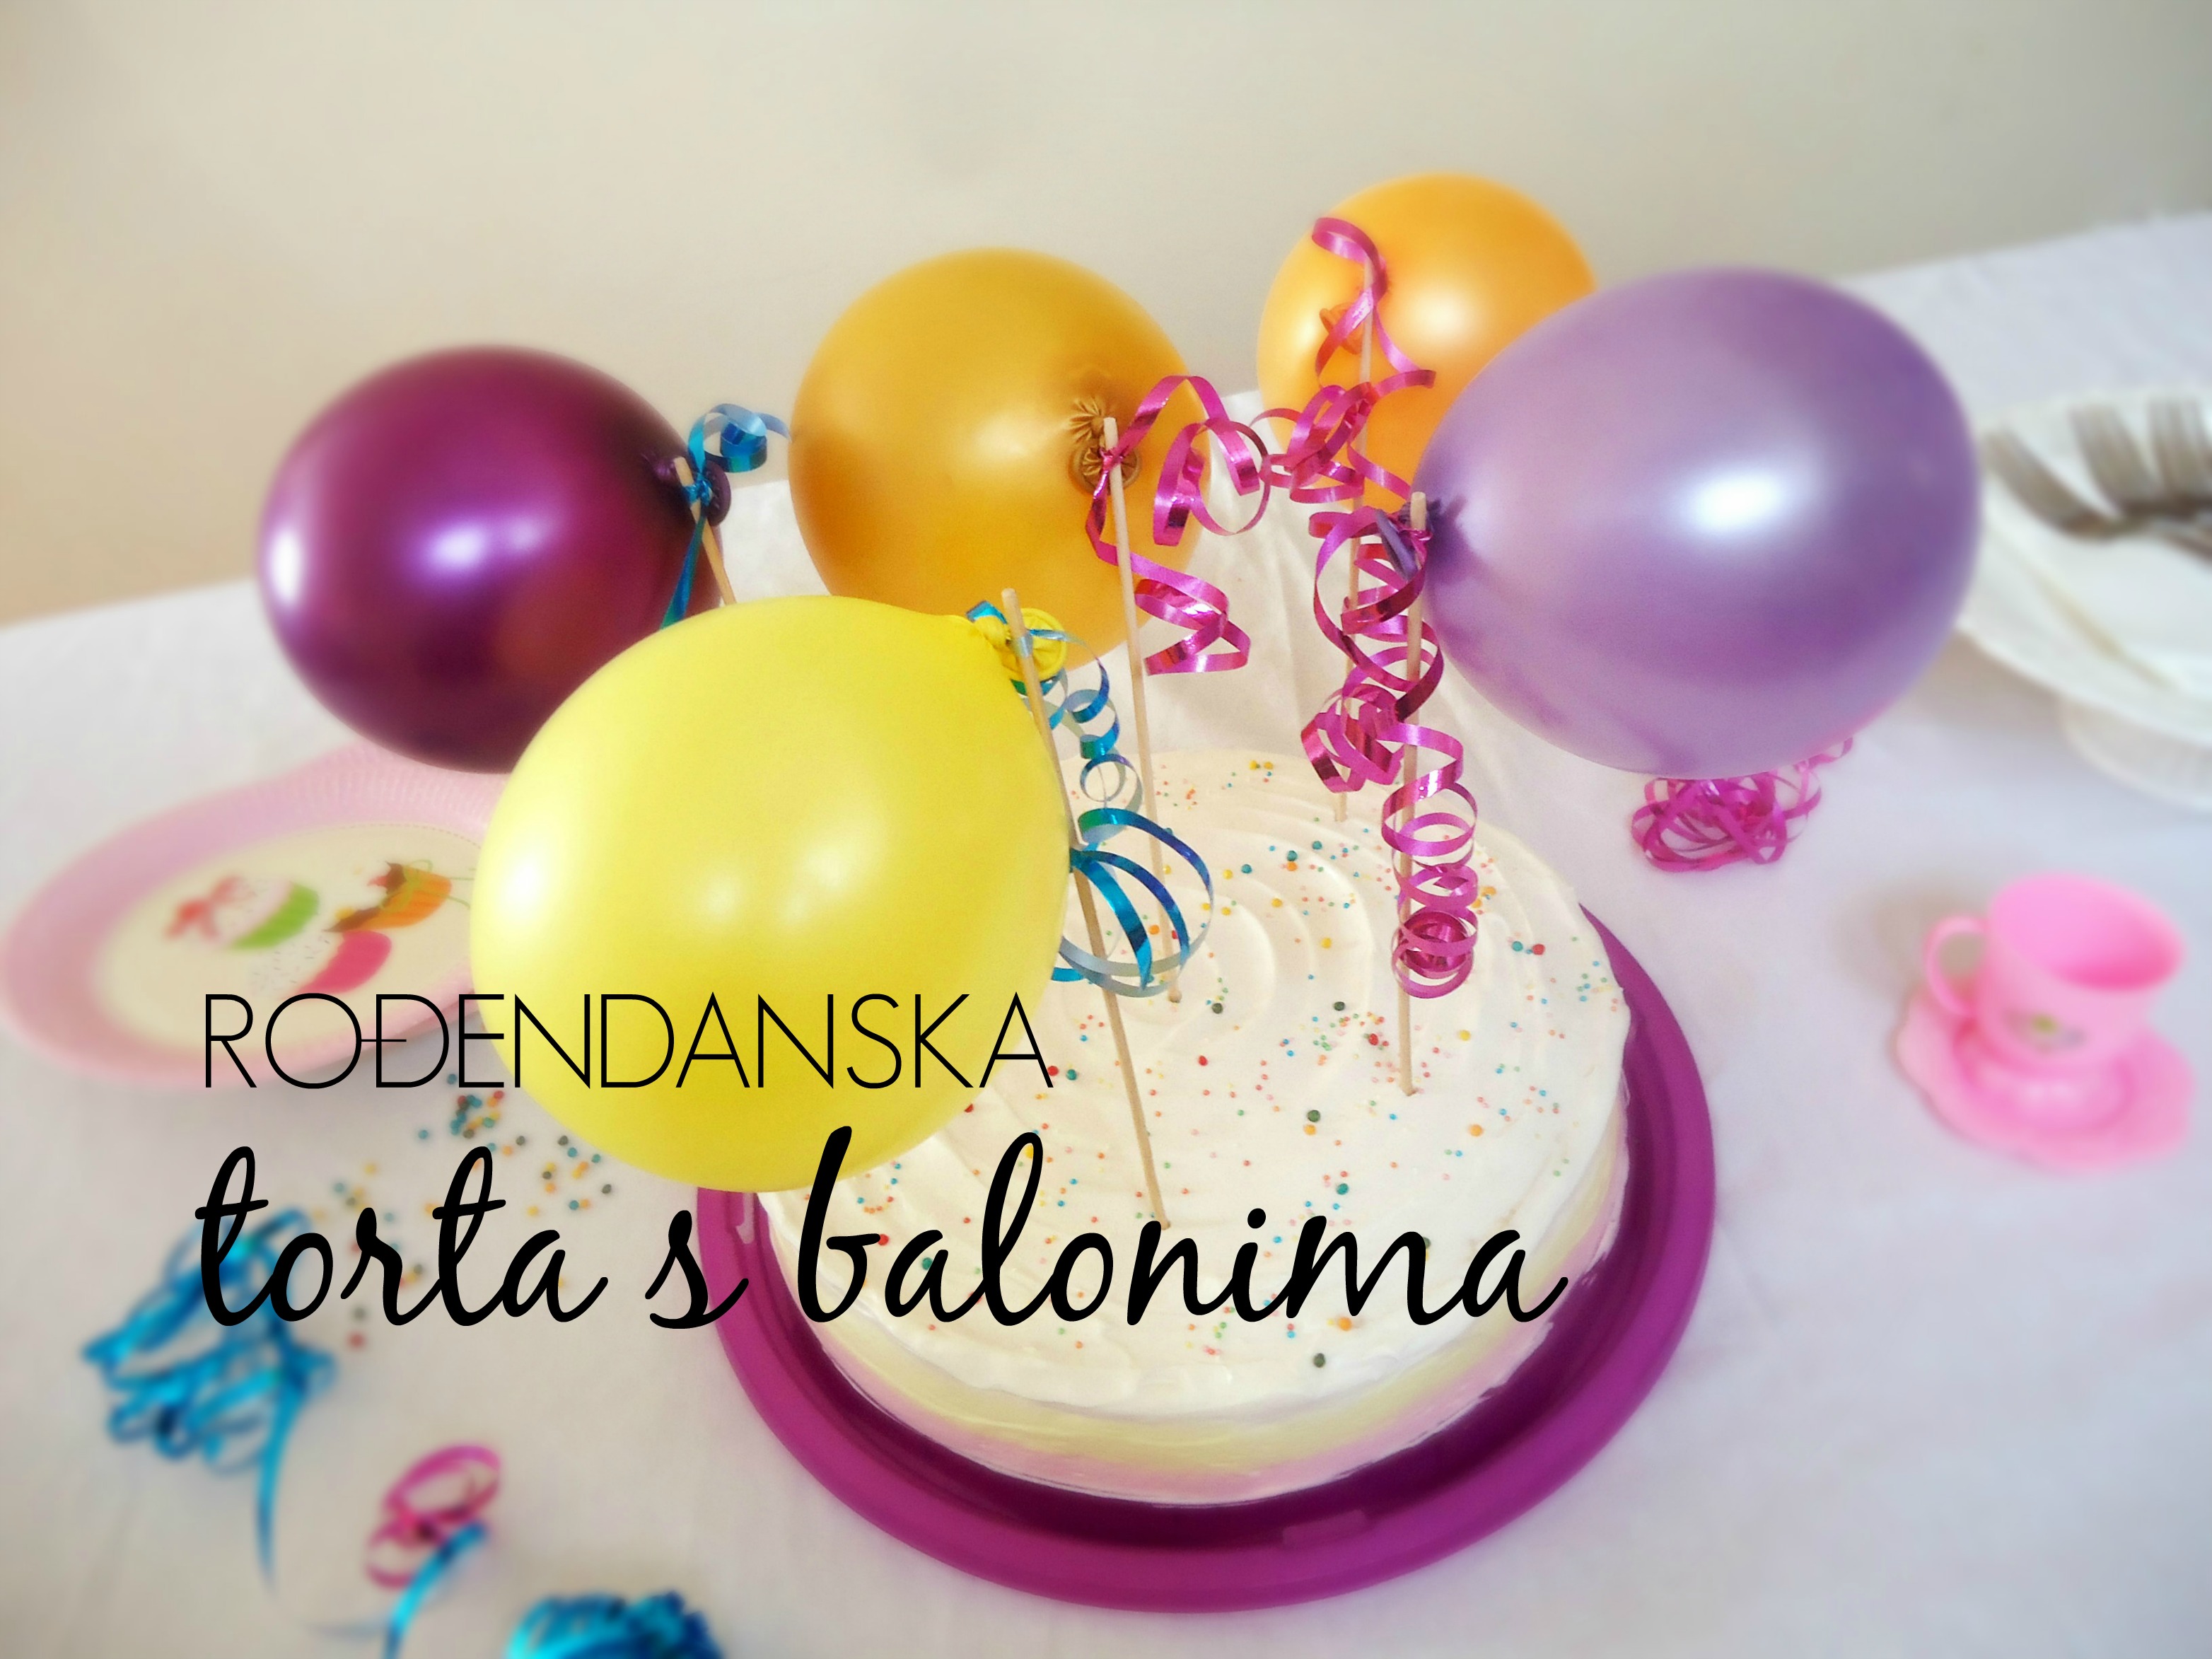 Rođendanska torta s balonima